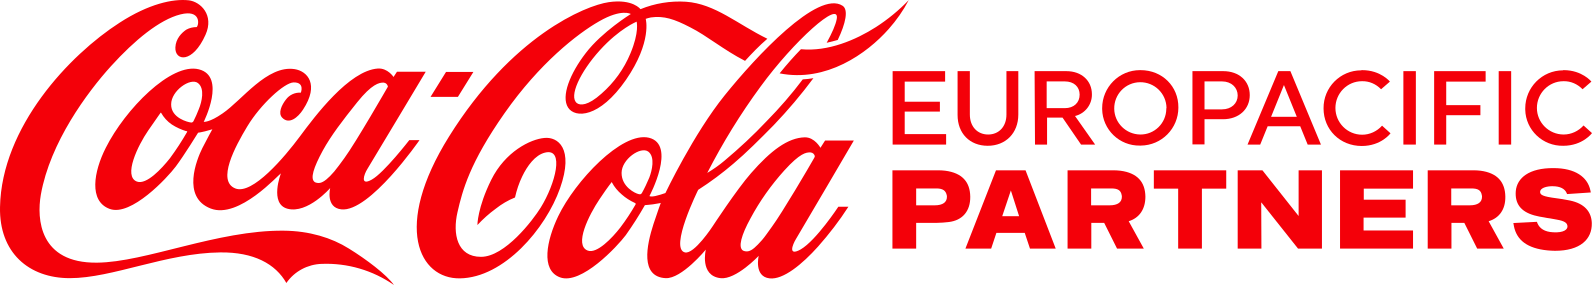 Coca-Cola European Partners
 logo large (transparent PNG)